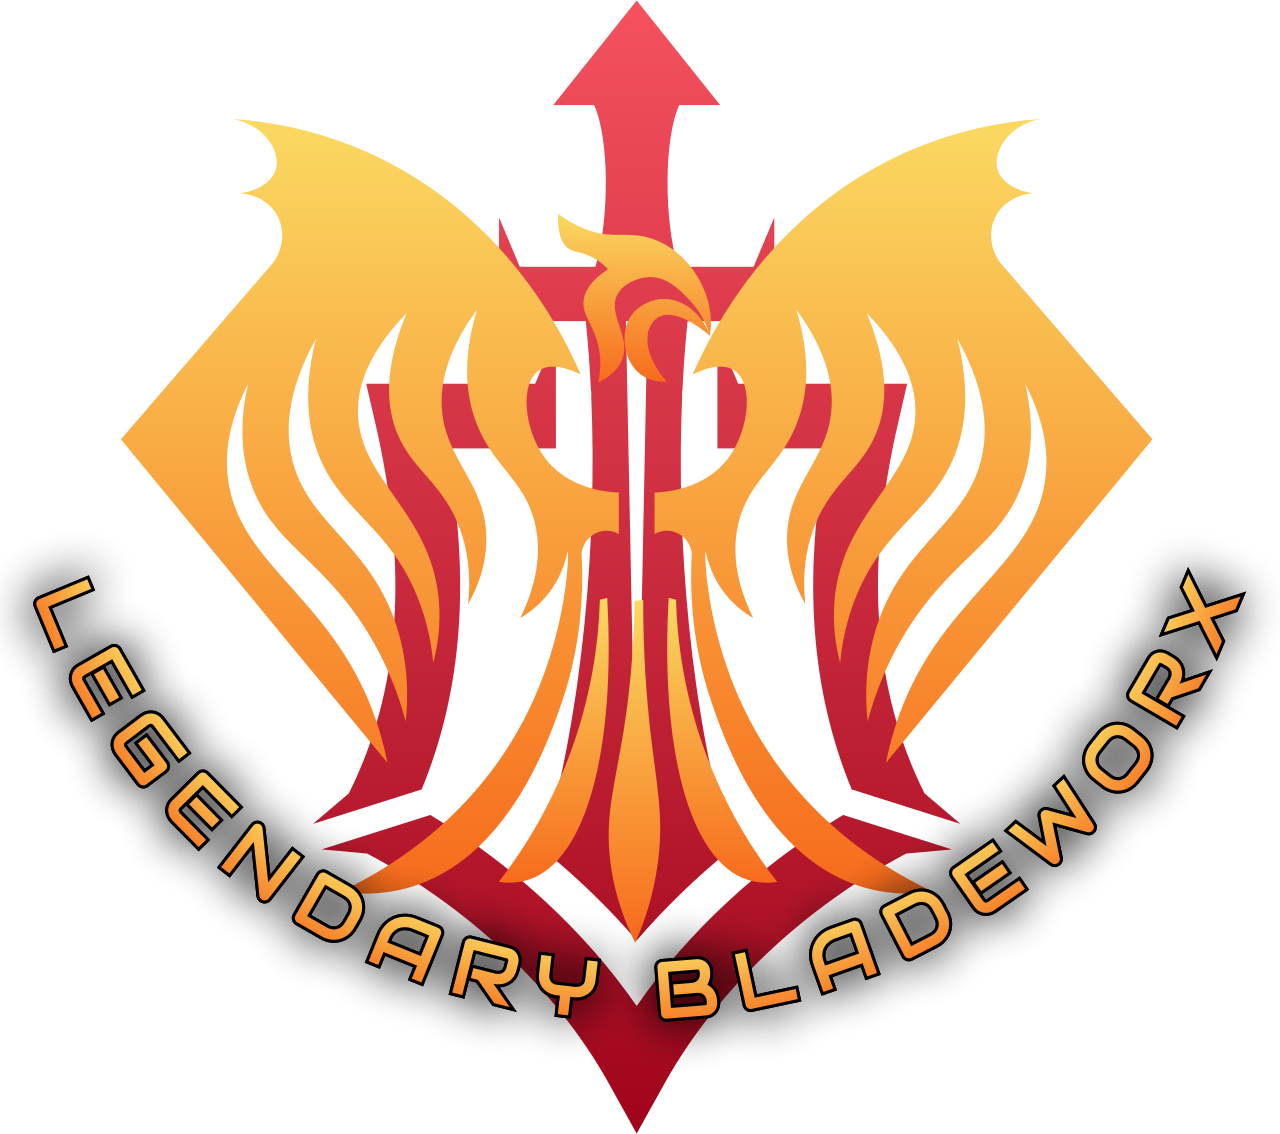 LEGENDARY BLADEWORX's logo